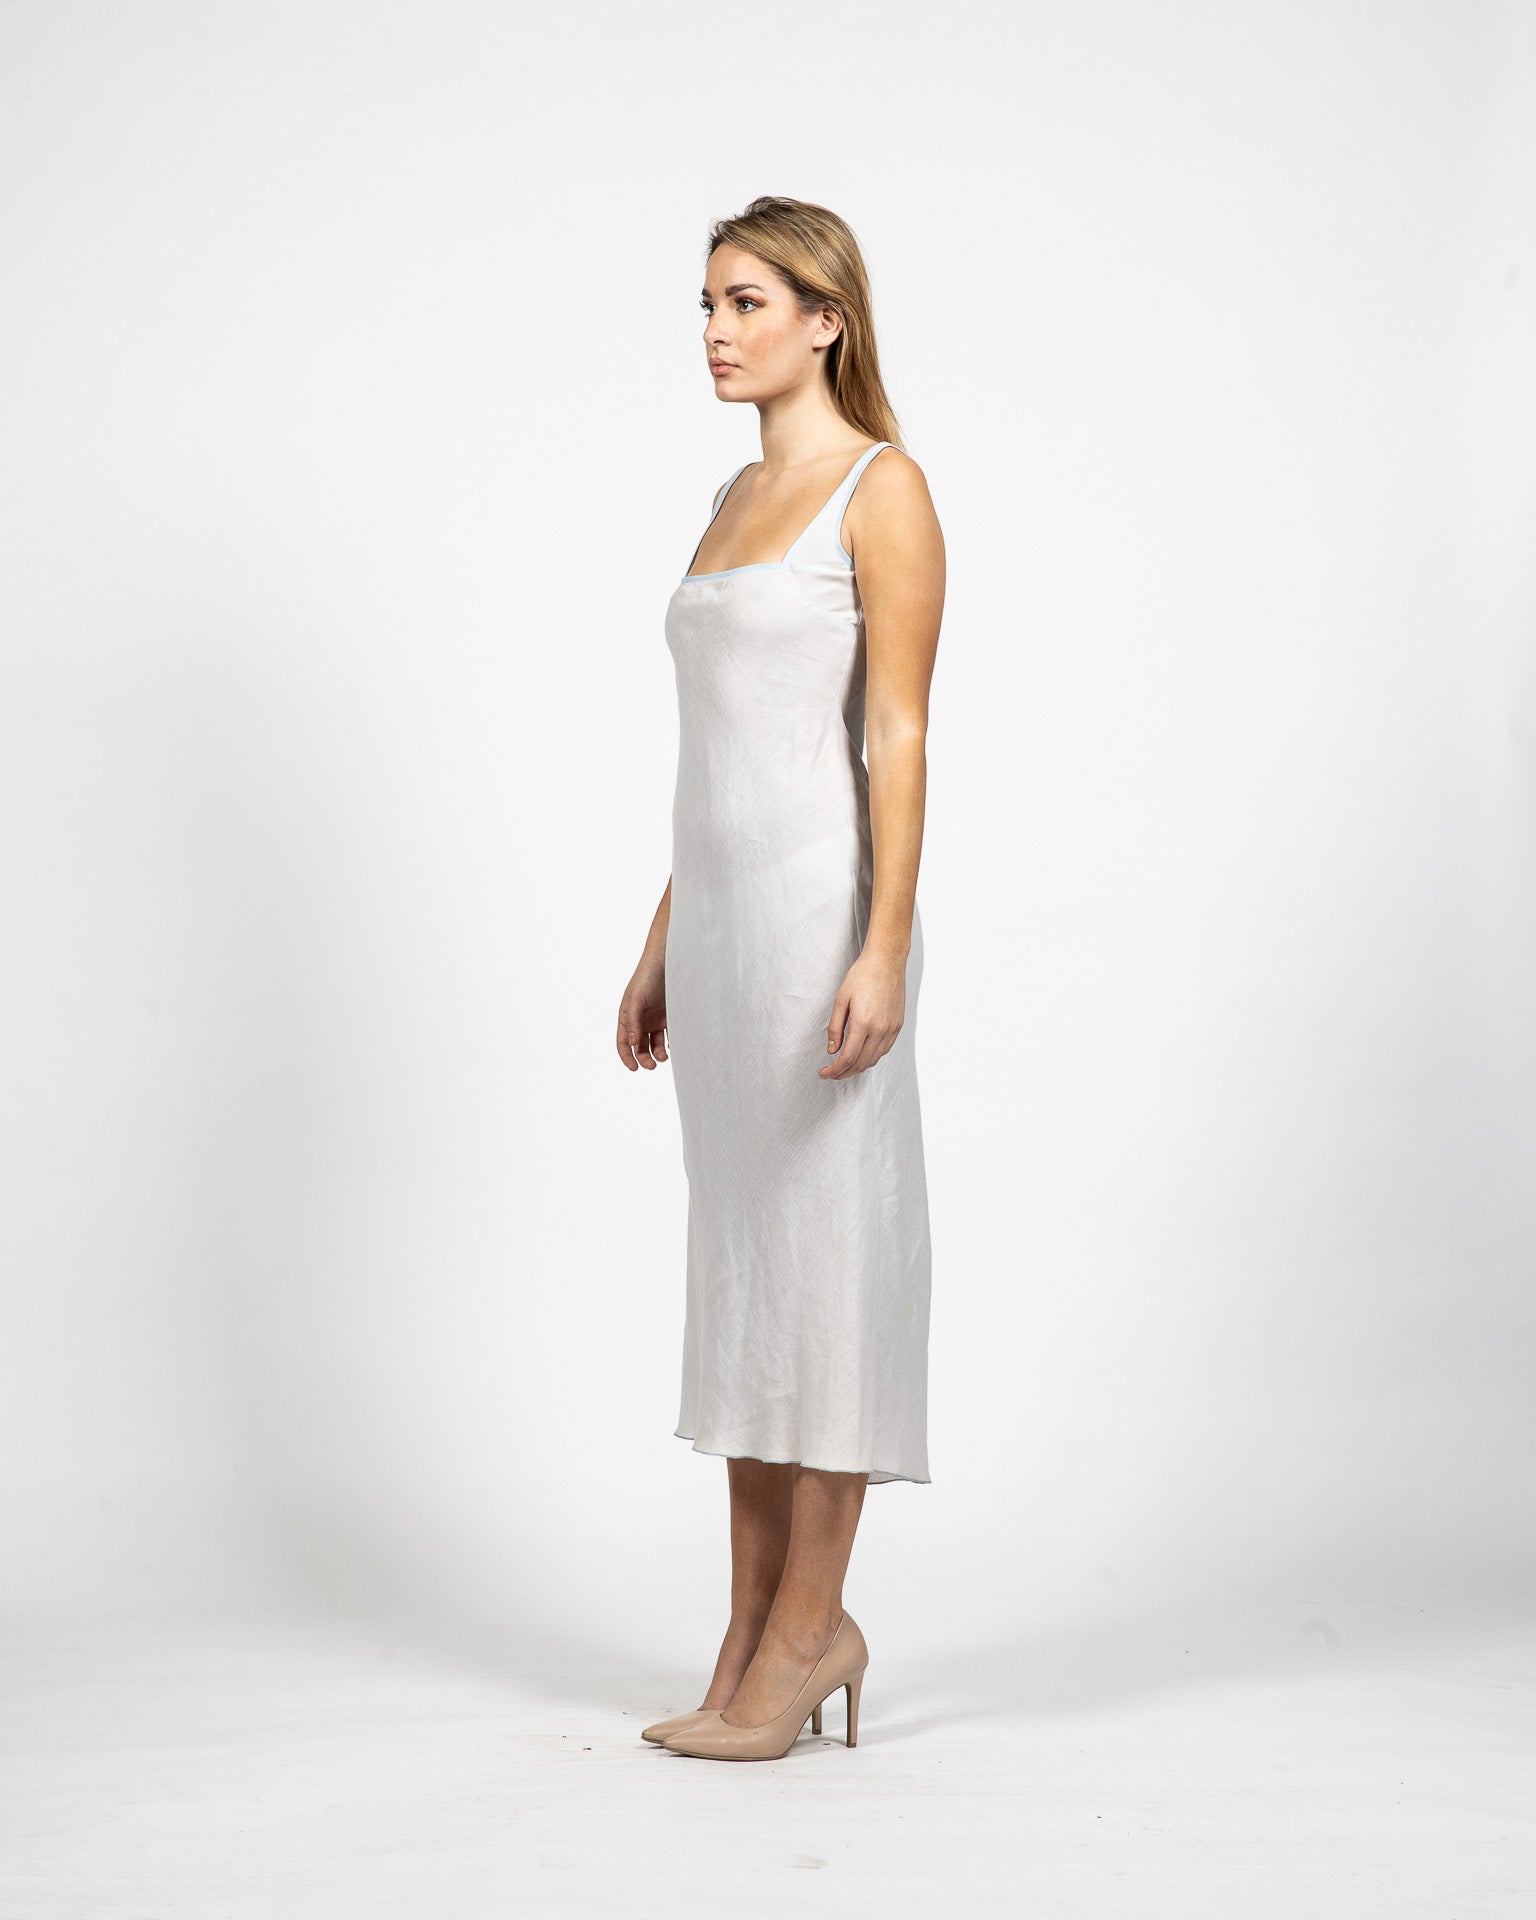 Square Grey Linen Dress - Side View - Samuel Vartan